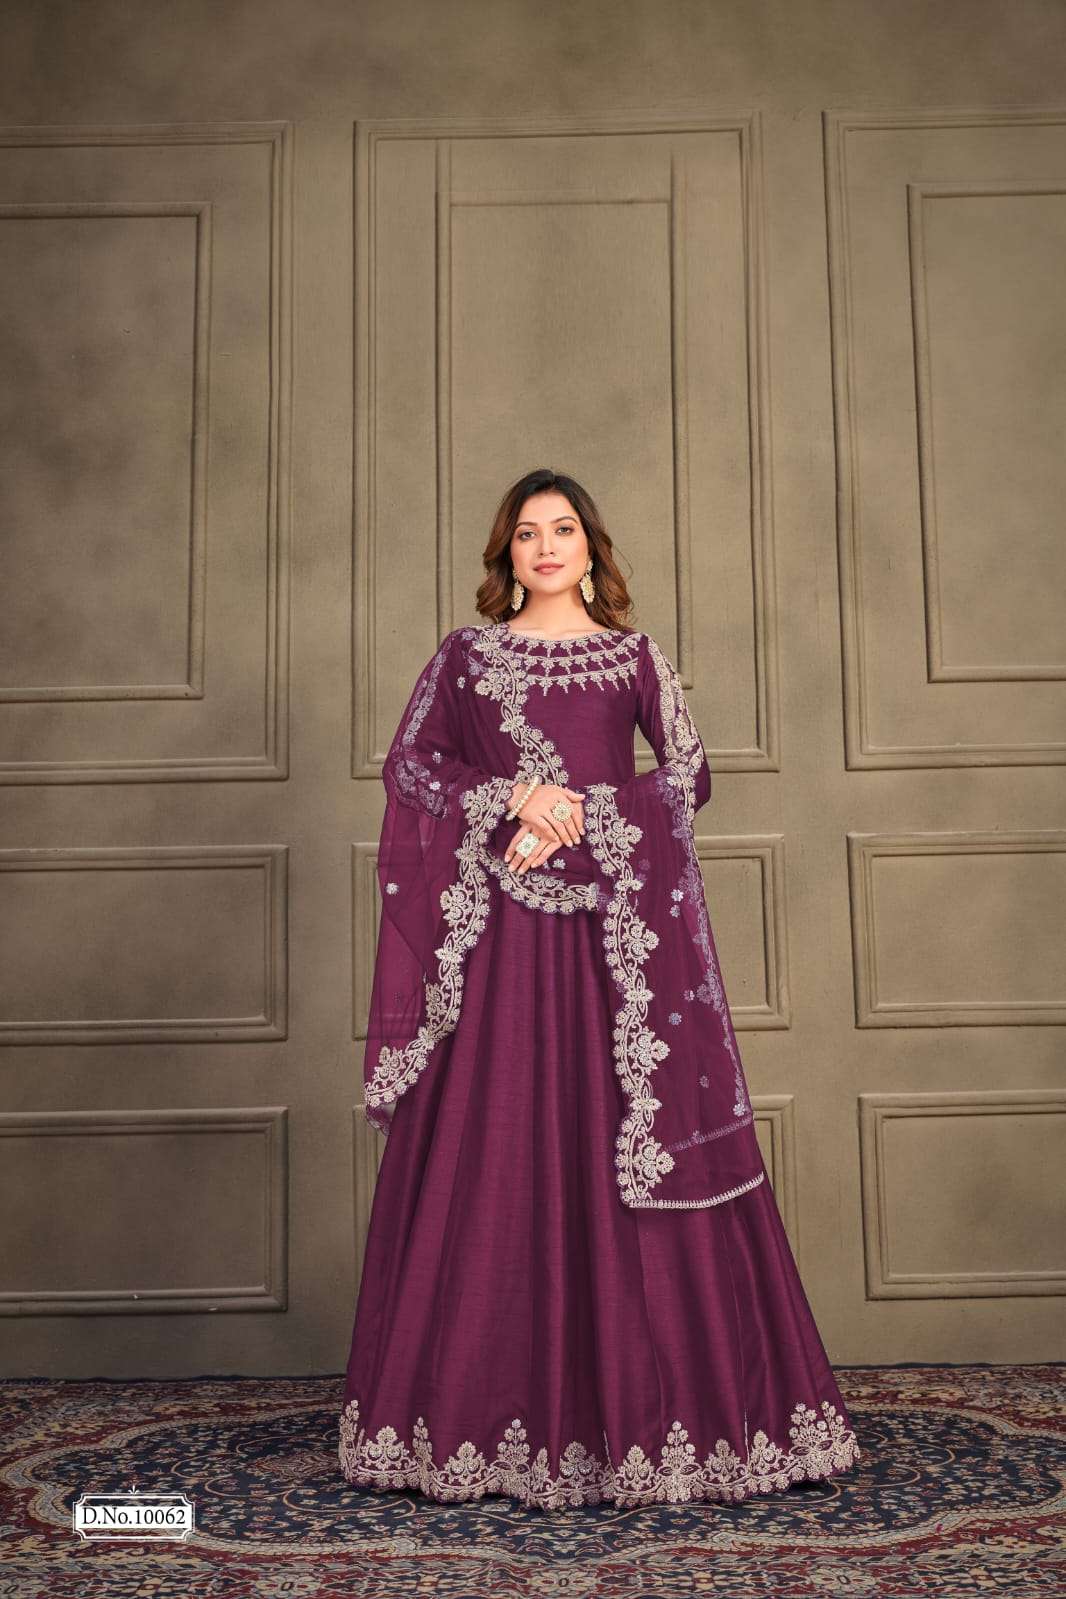 Kalyan Silks - Maroon Color #Salwar Full #Gown (Rs6,560) @ #kalyansilks.com  Shop online: https://bit.ly/2TNiXGt | Facebook